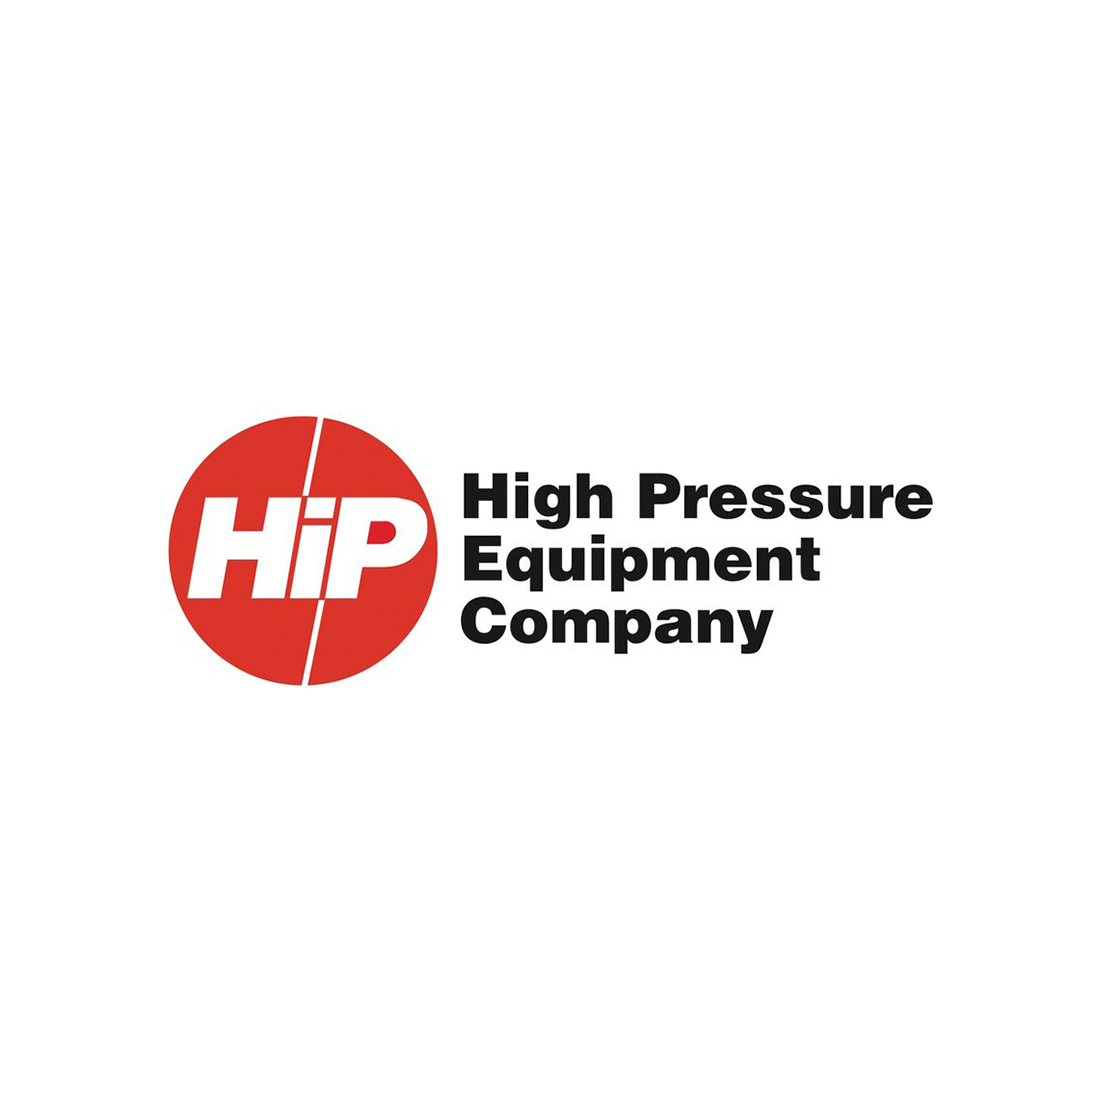 High Pressure Equipment Company